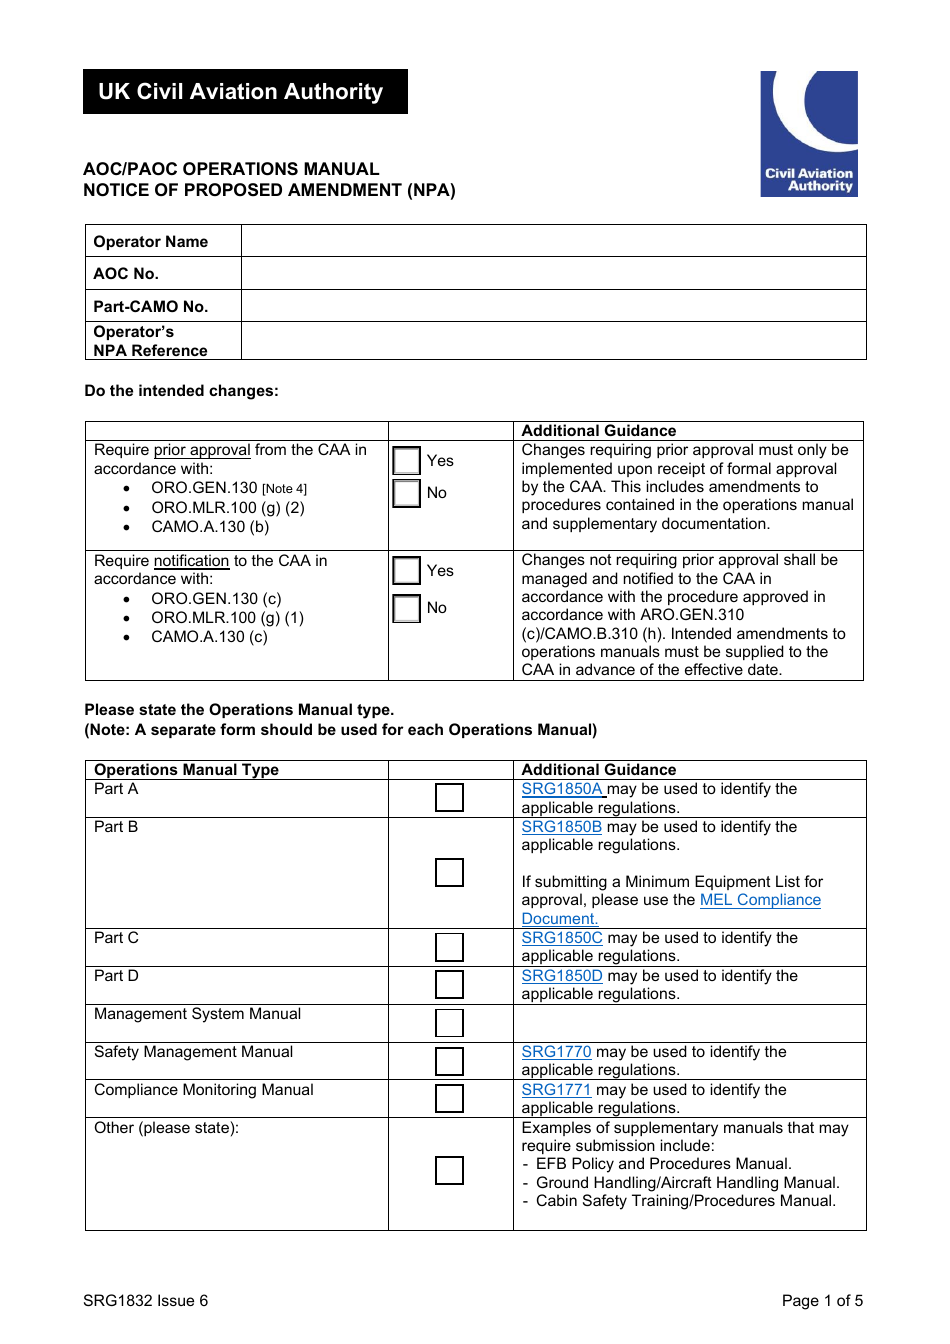 Form SRG1832 Aoc / Paoc Operations Manual Notice of Proposed Amendment (Npa) - United Kingdom, Page 1